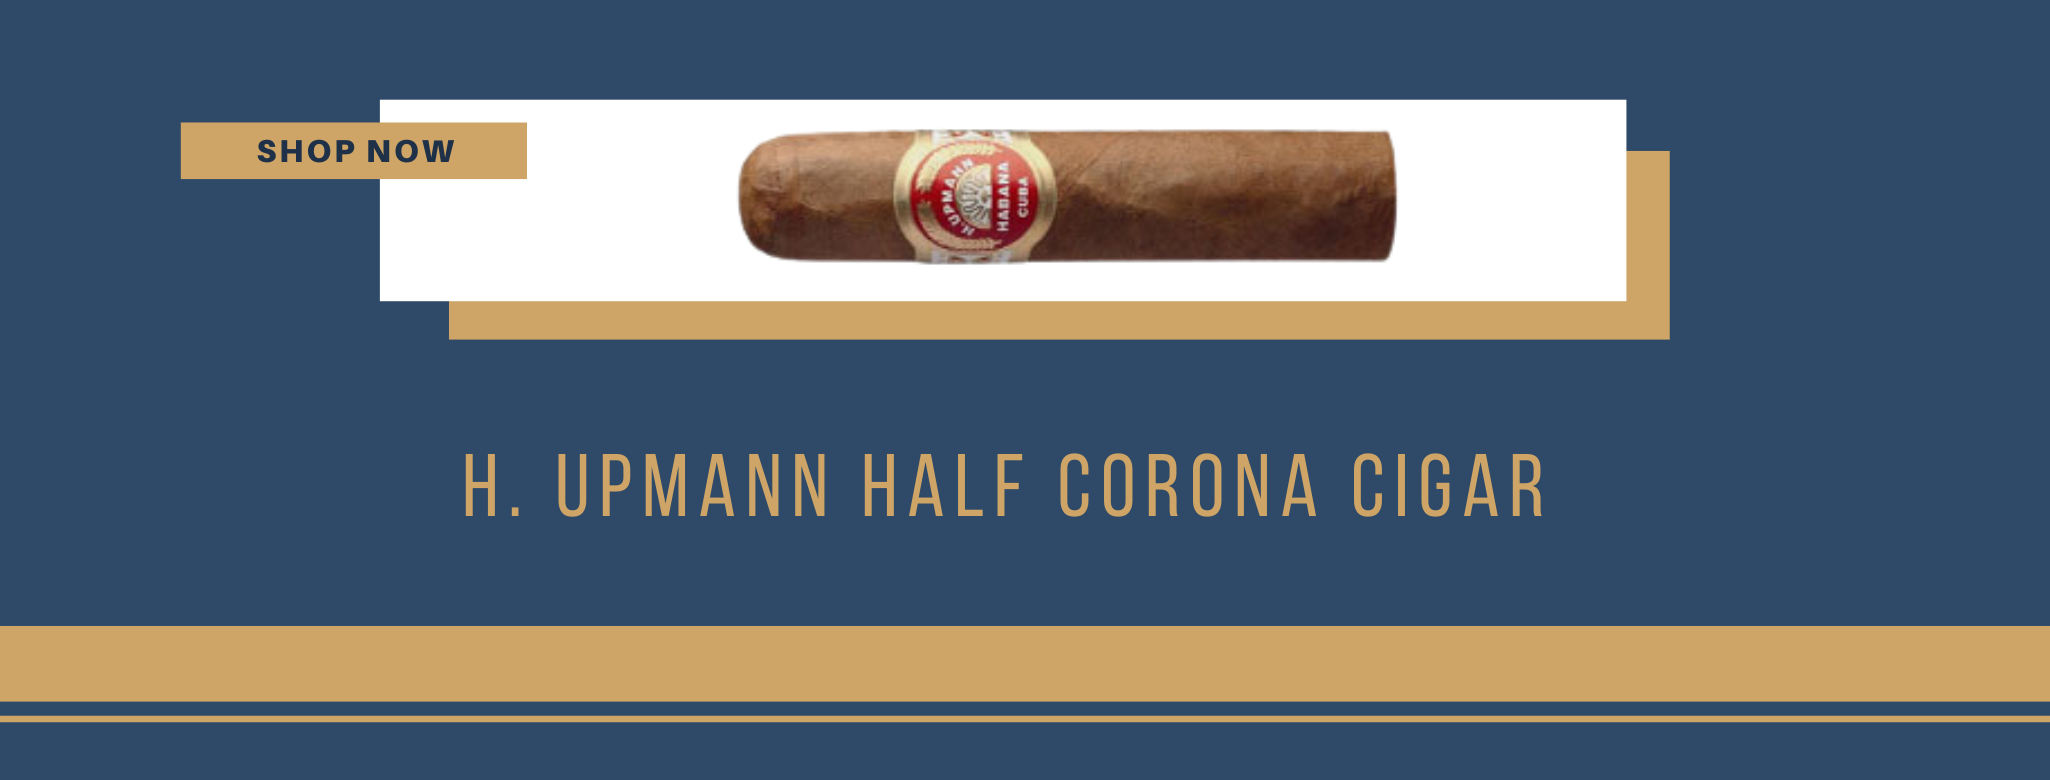 Buy H. Upmann Half Corona cigars online